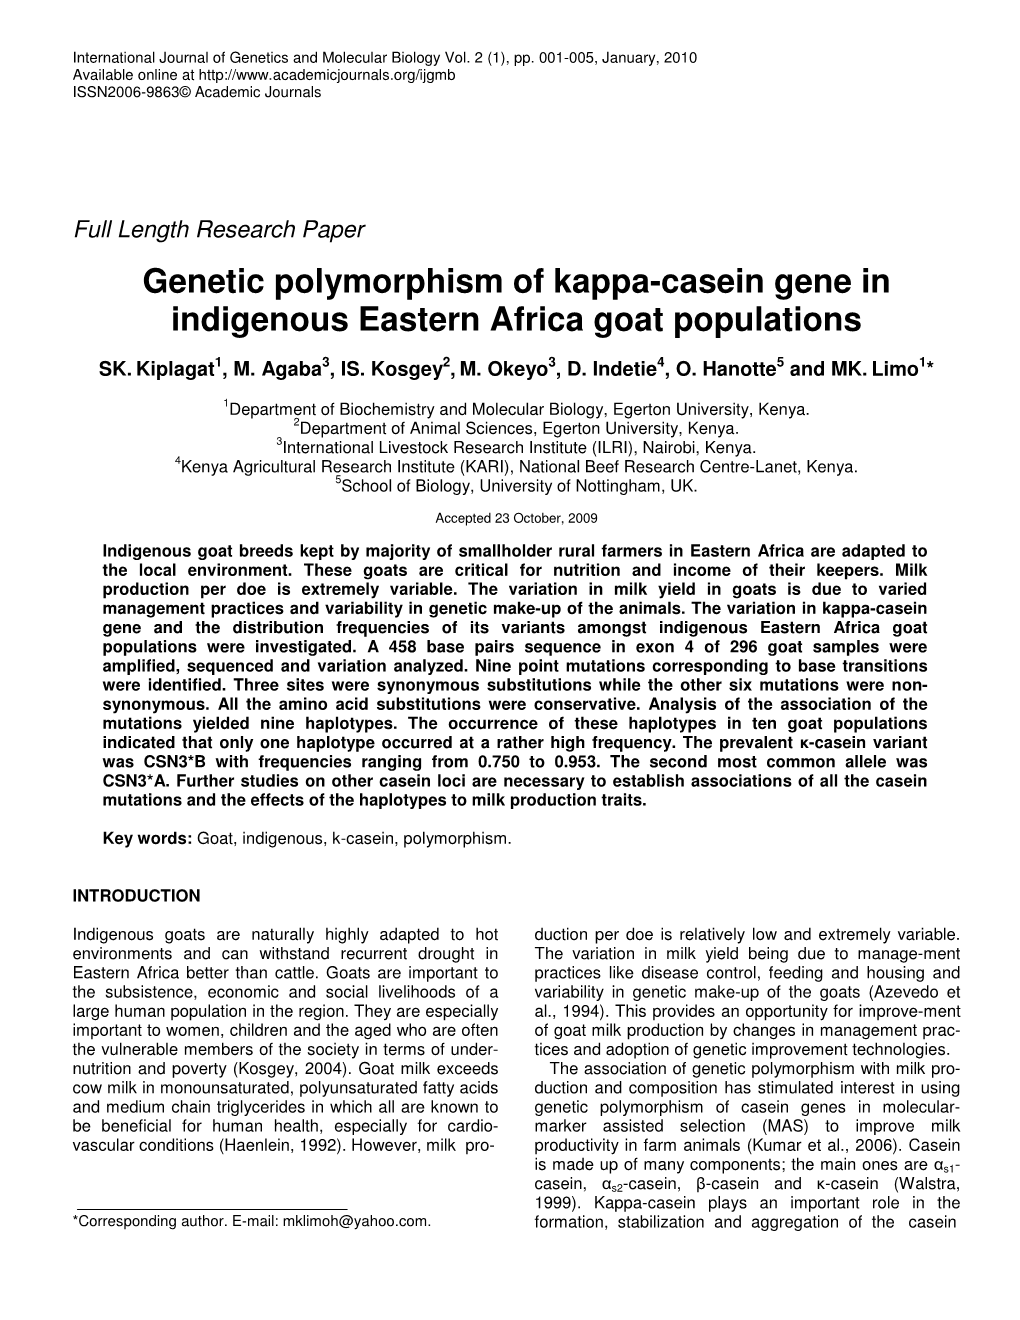 Genetic Polymorphism of Kappa-Casein Gene in Indigenous Eastern Africa Goat Populations